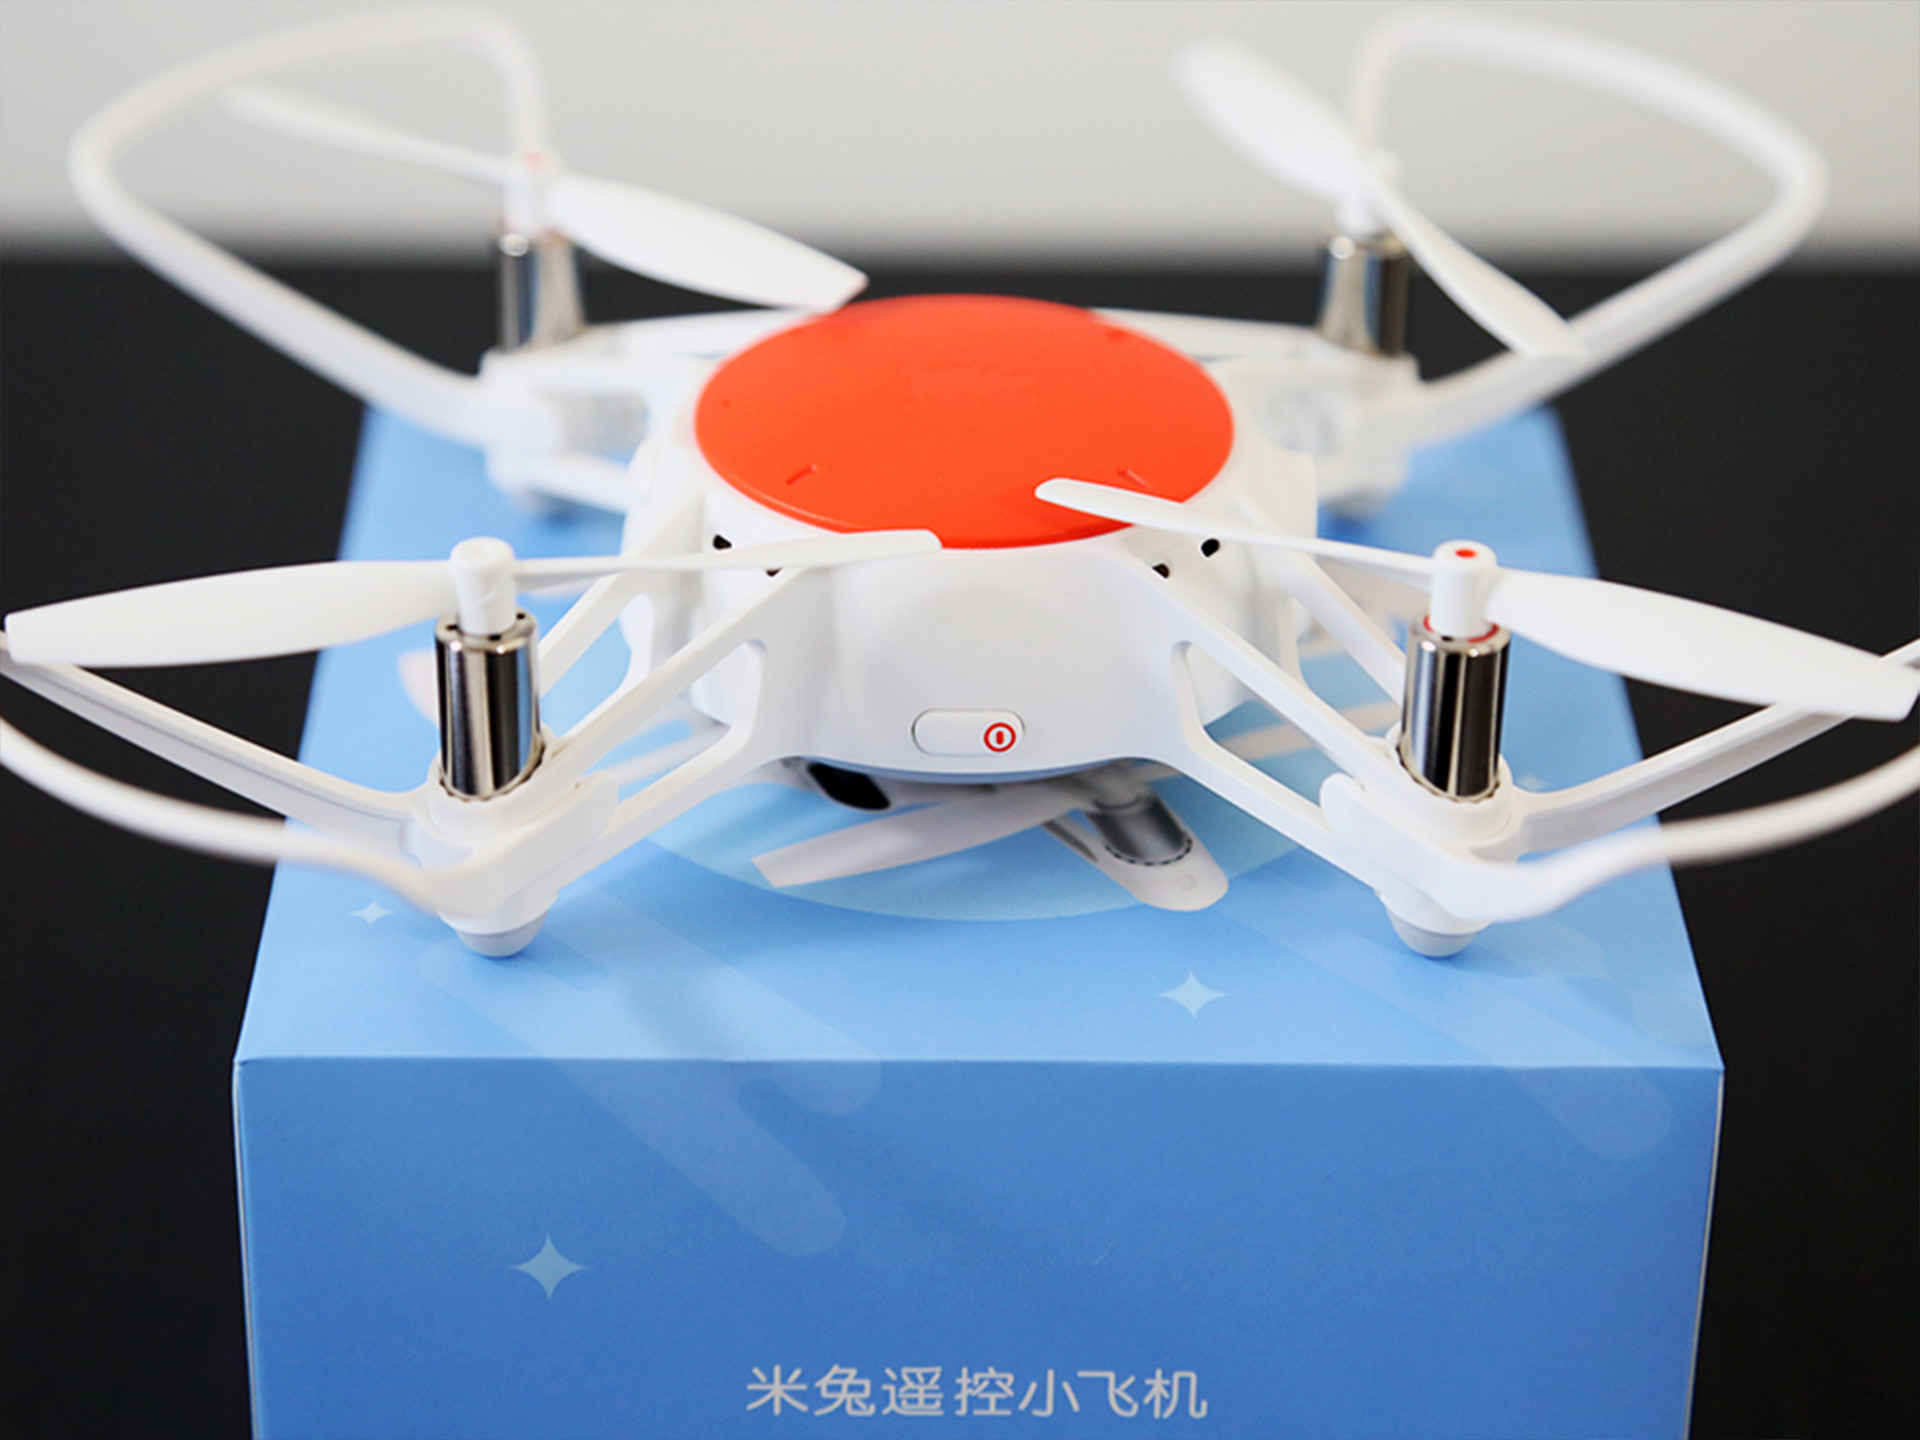 xiaomi-mitu-rc-drone-reAL-7.jpg